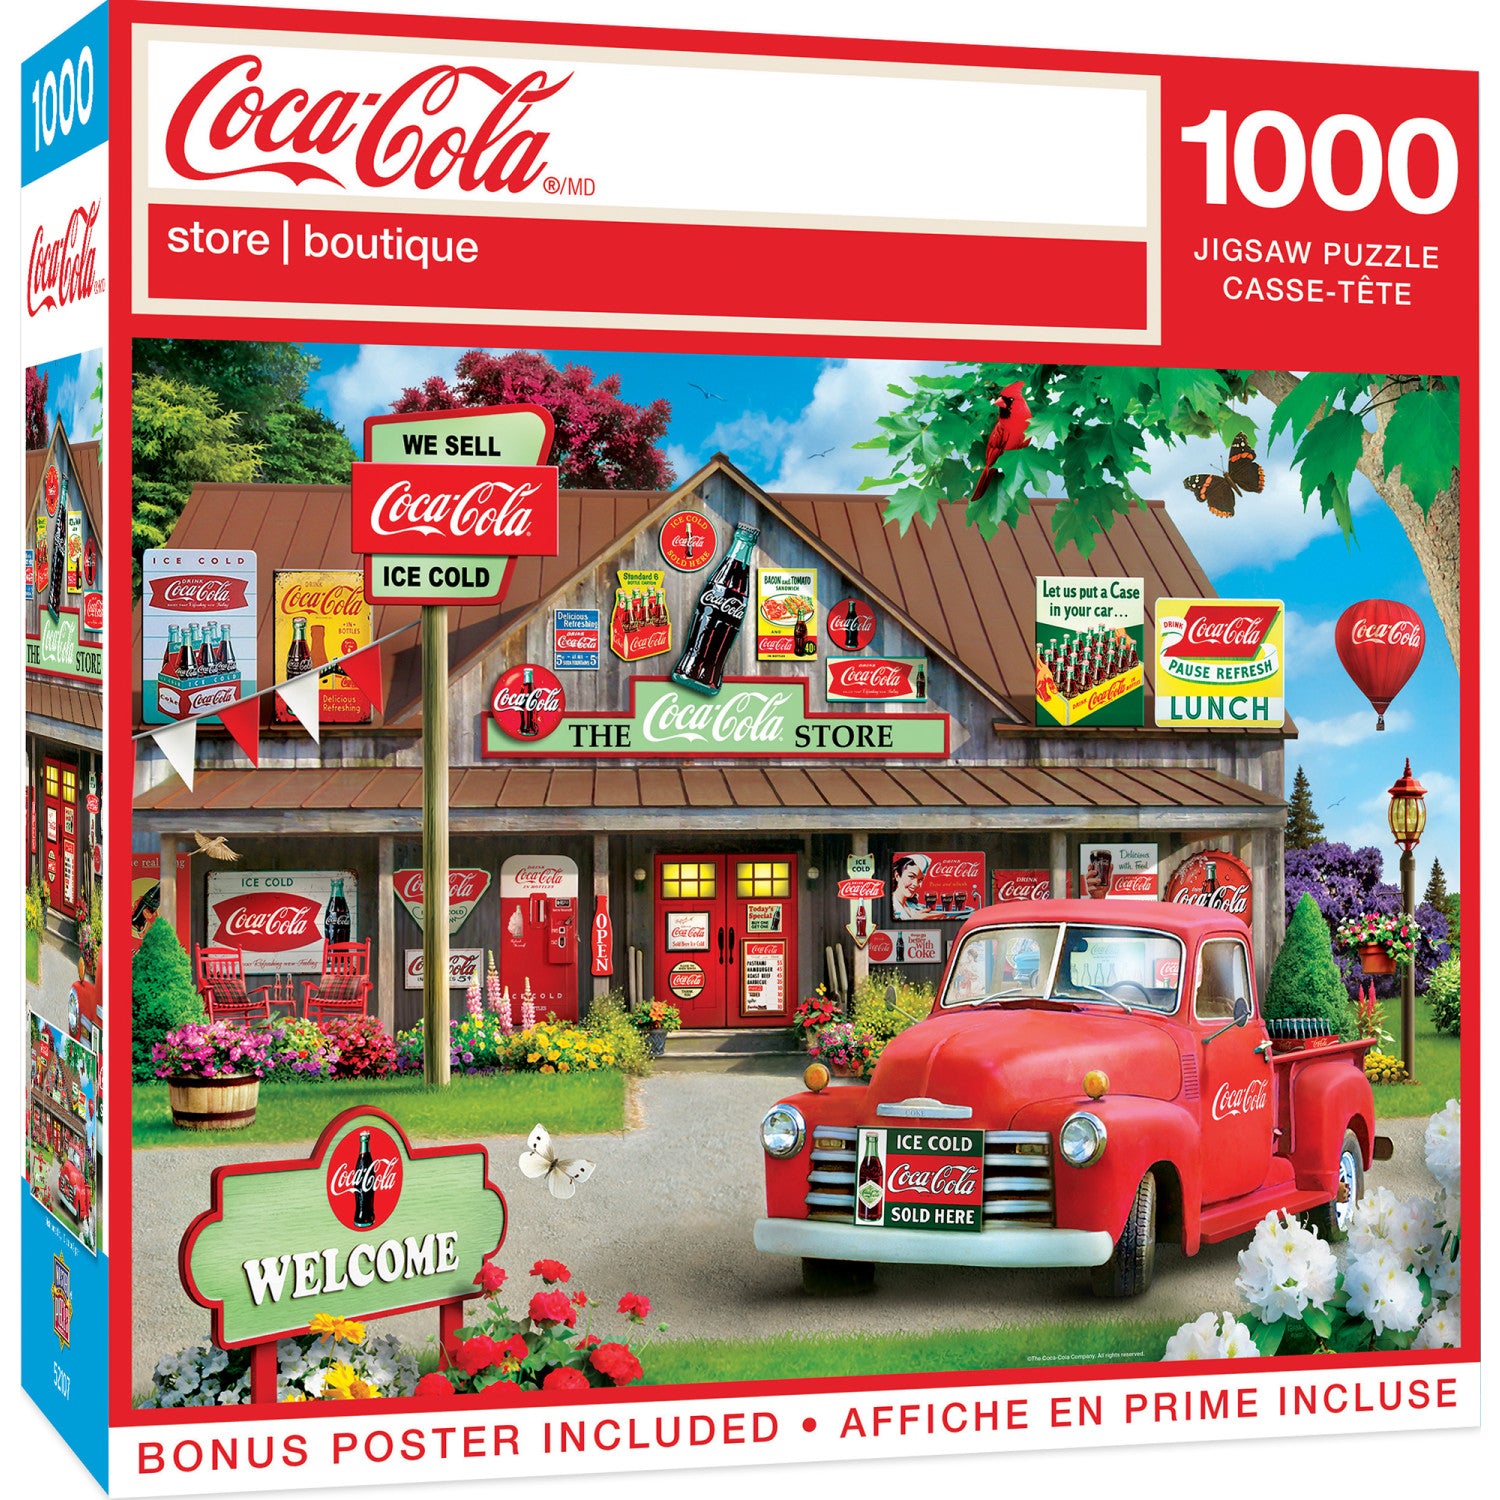 Springbok Coca-Cola Ice Cold Christmas Jigsaw Puzzle - 1000pc